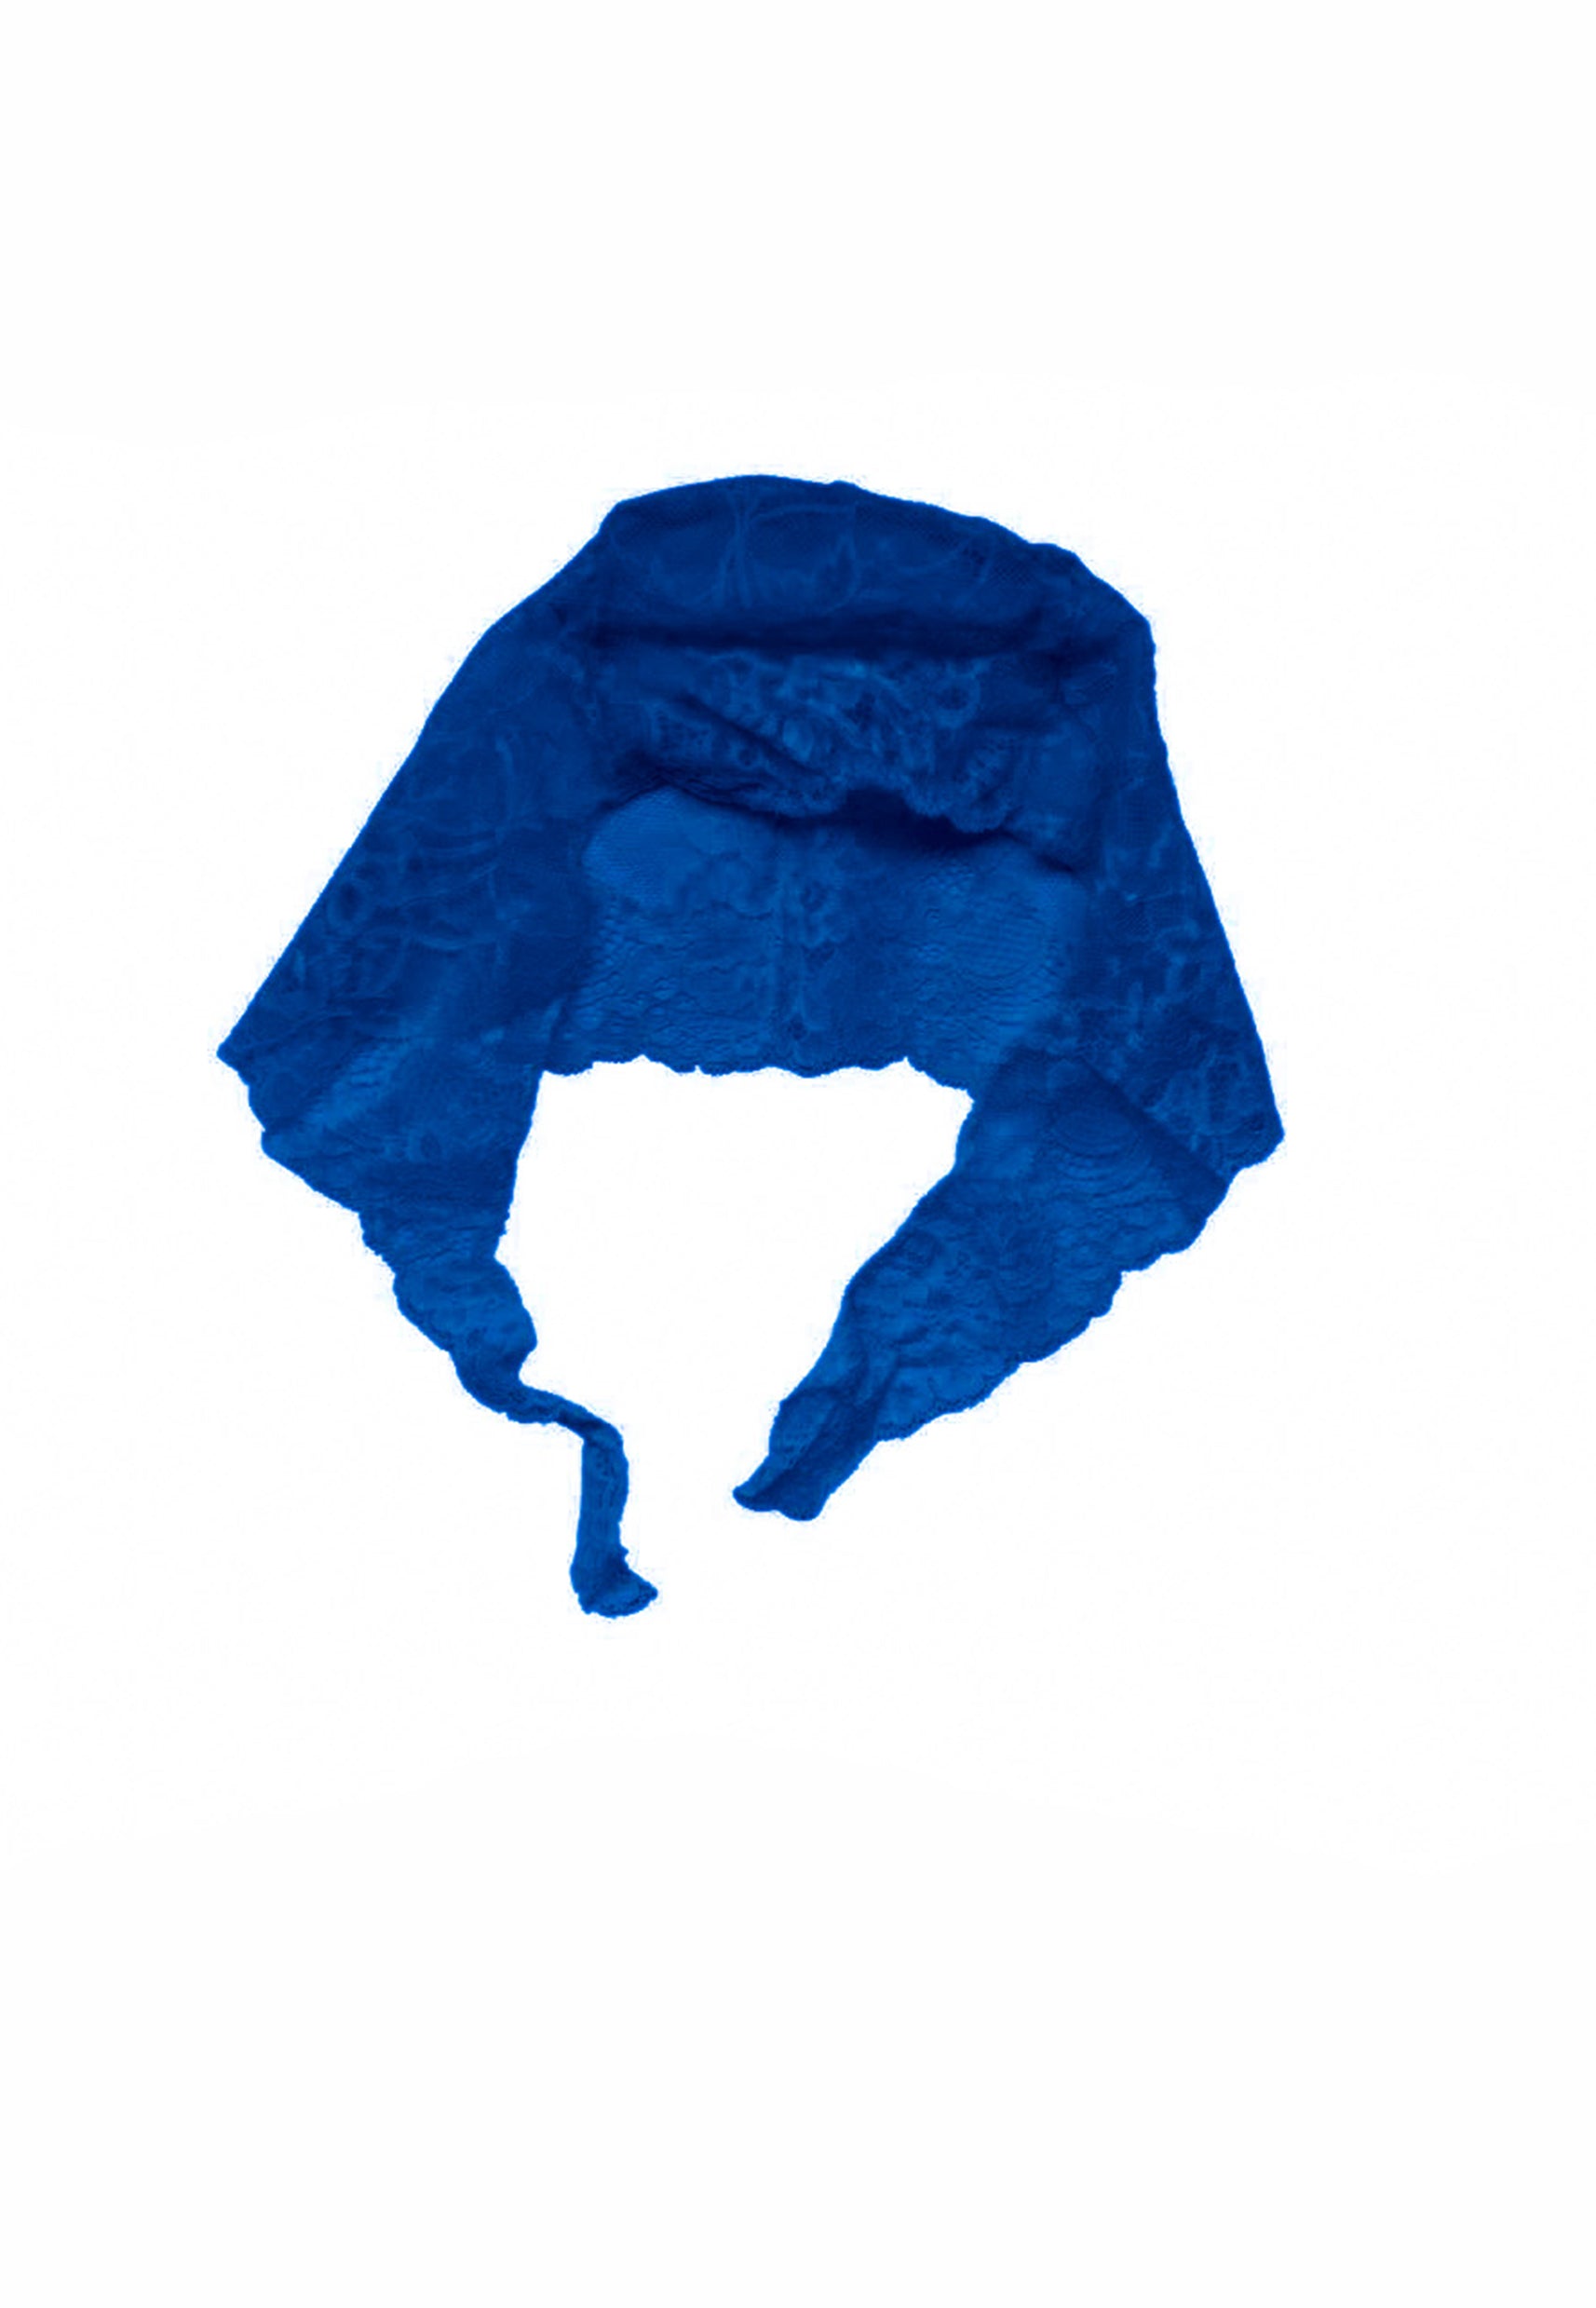 Lace Hijab Cap - Navy Blue